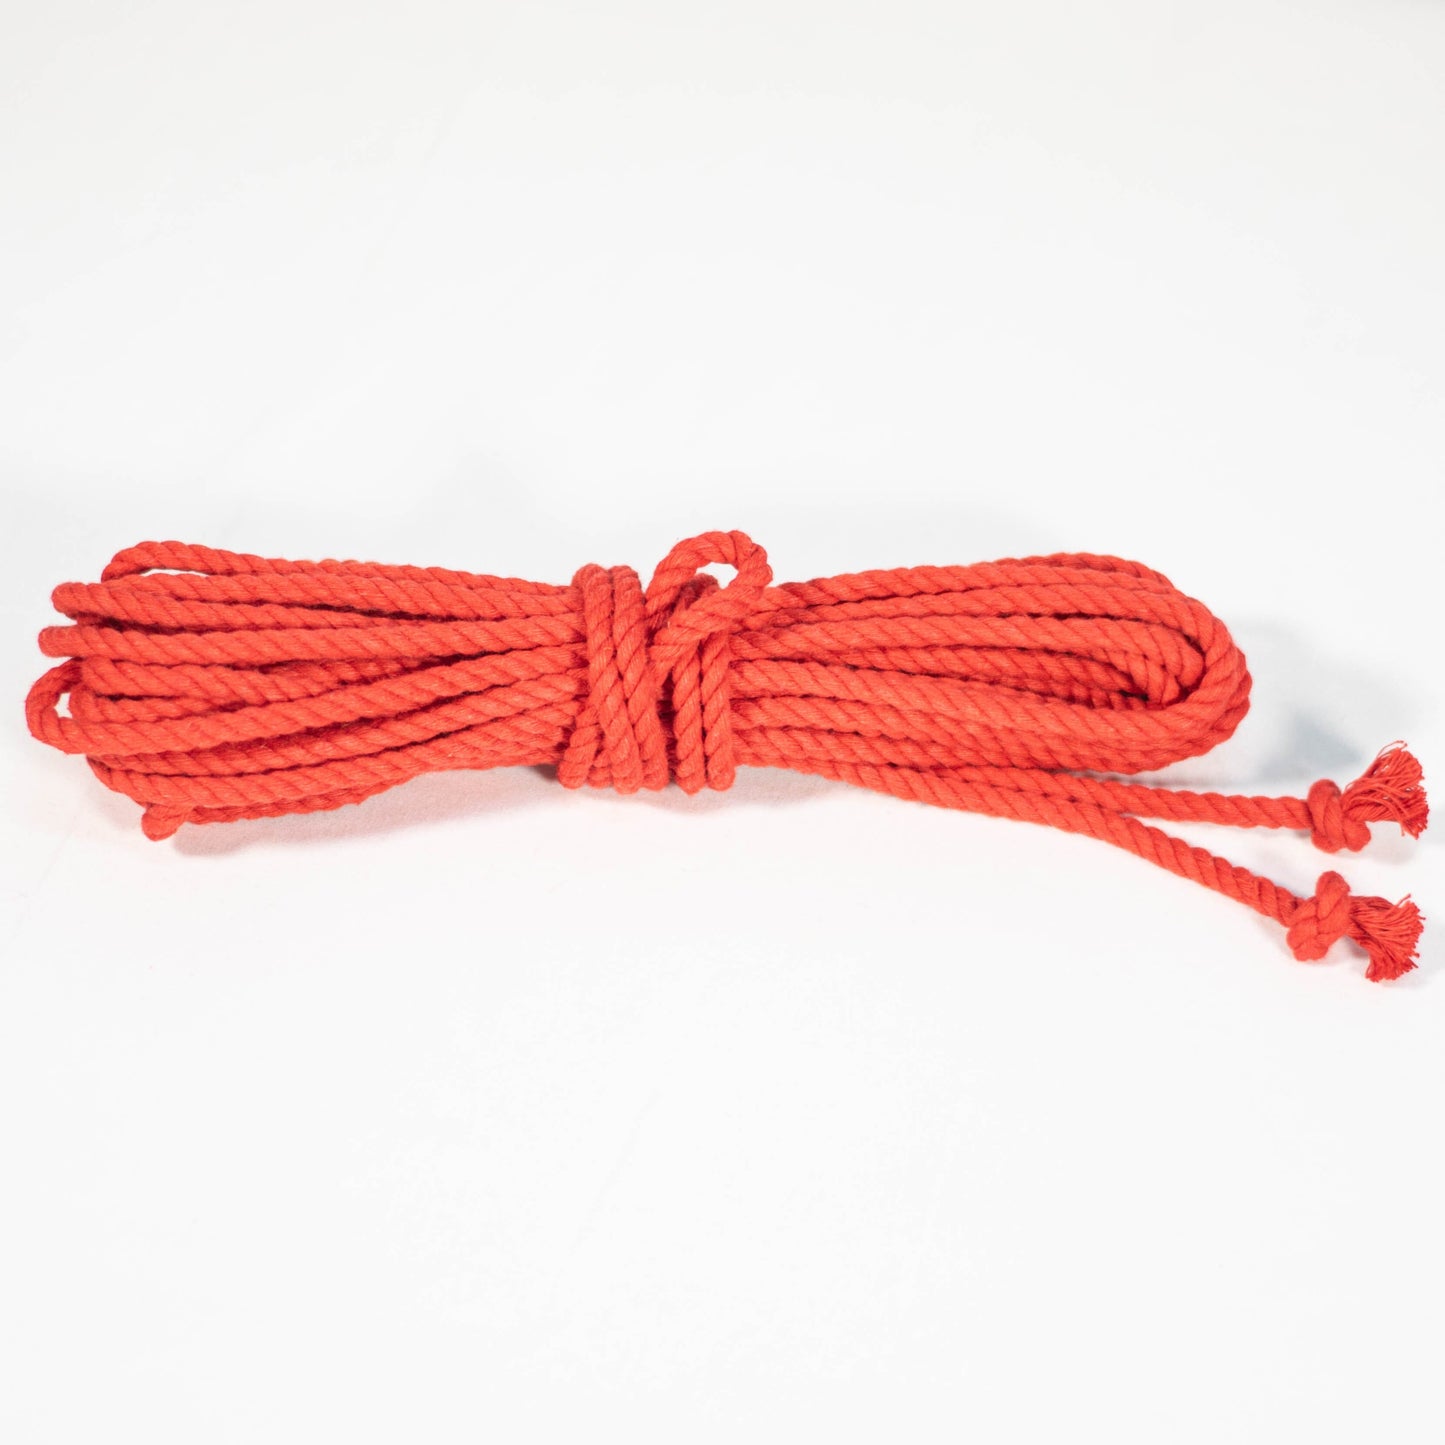 Cotton Play Ropes Shibari Rope red Single length 